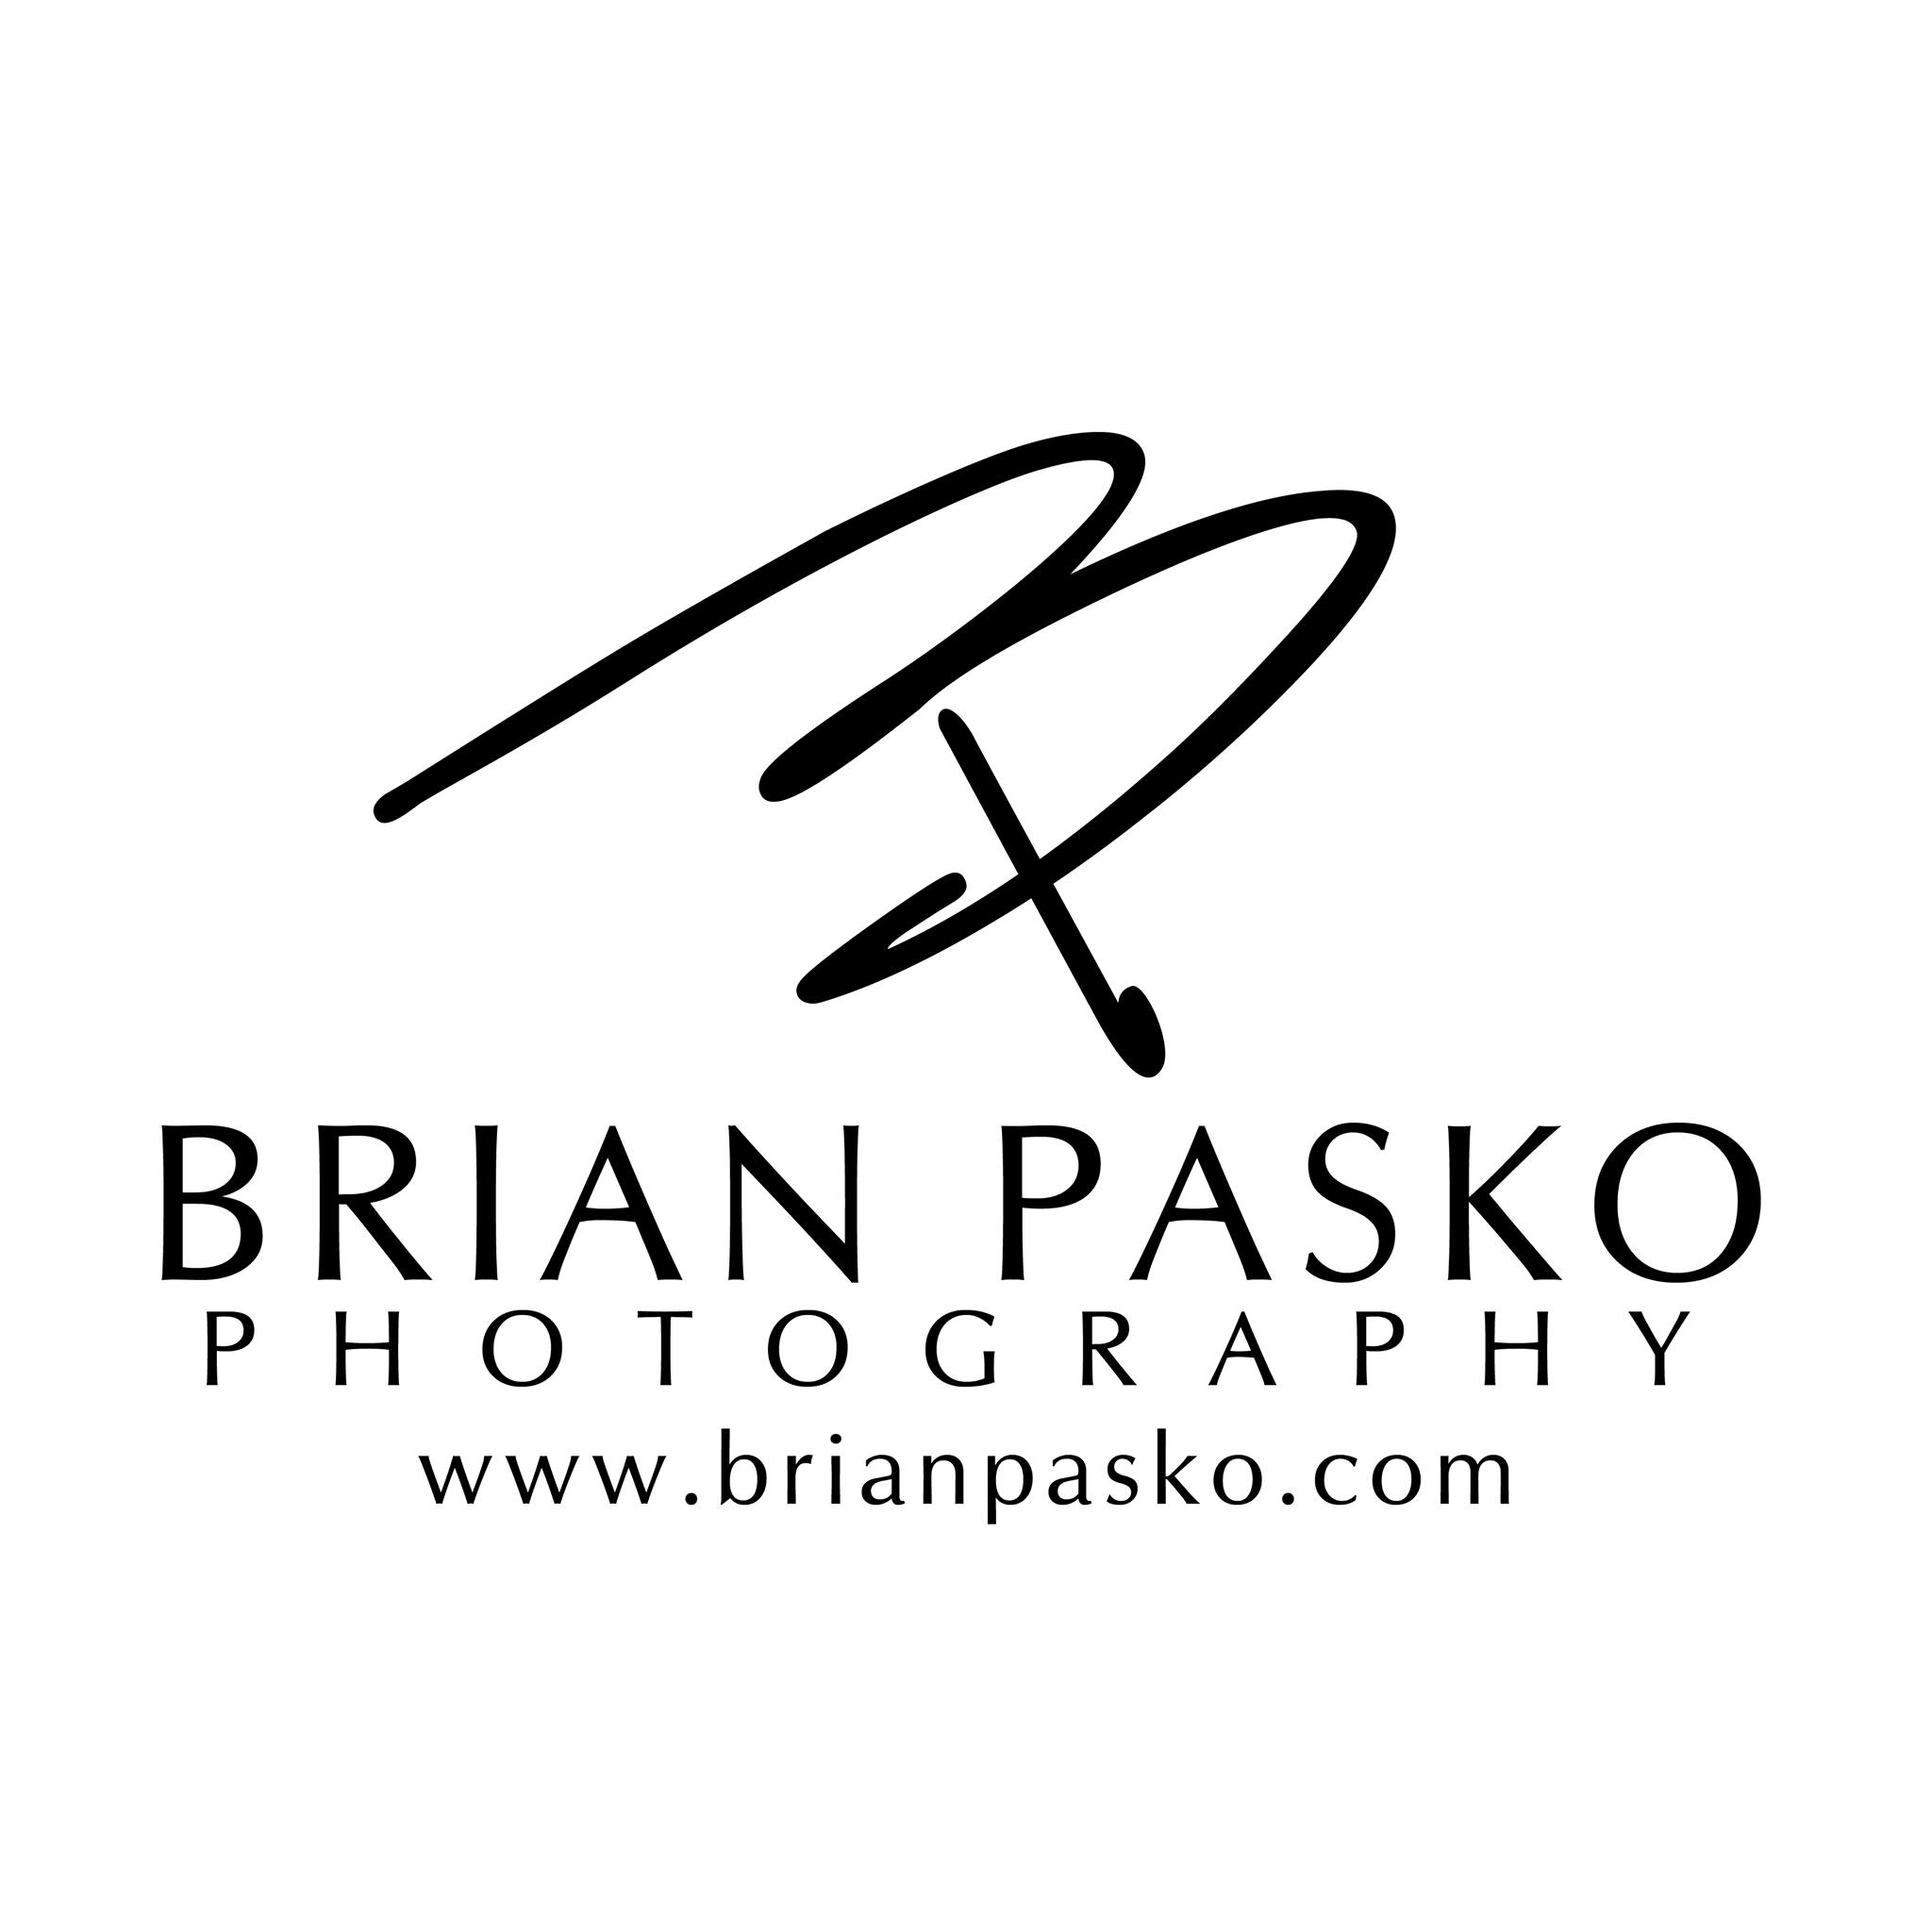 Brian Pasko Photography 12550 SE 272nd Ave, Boring Oregon 97009